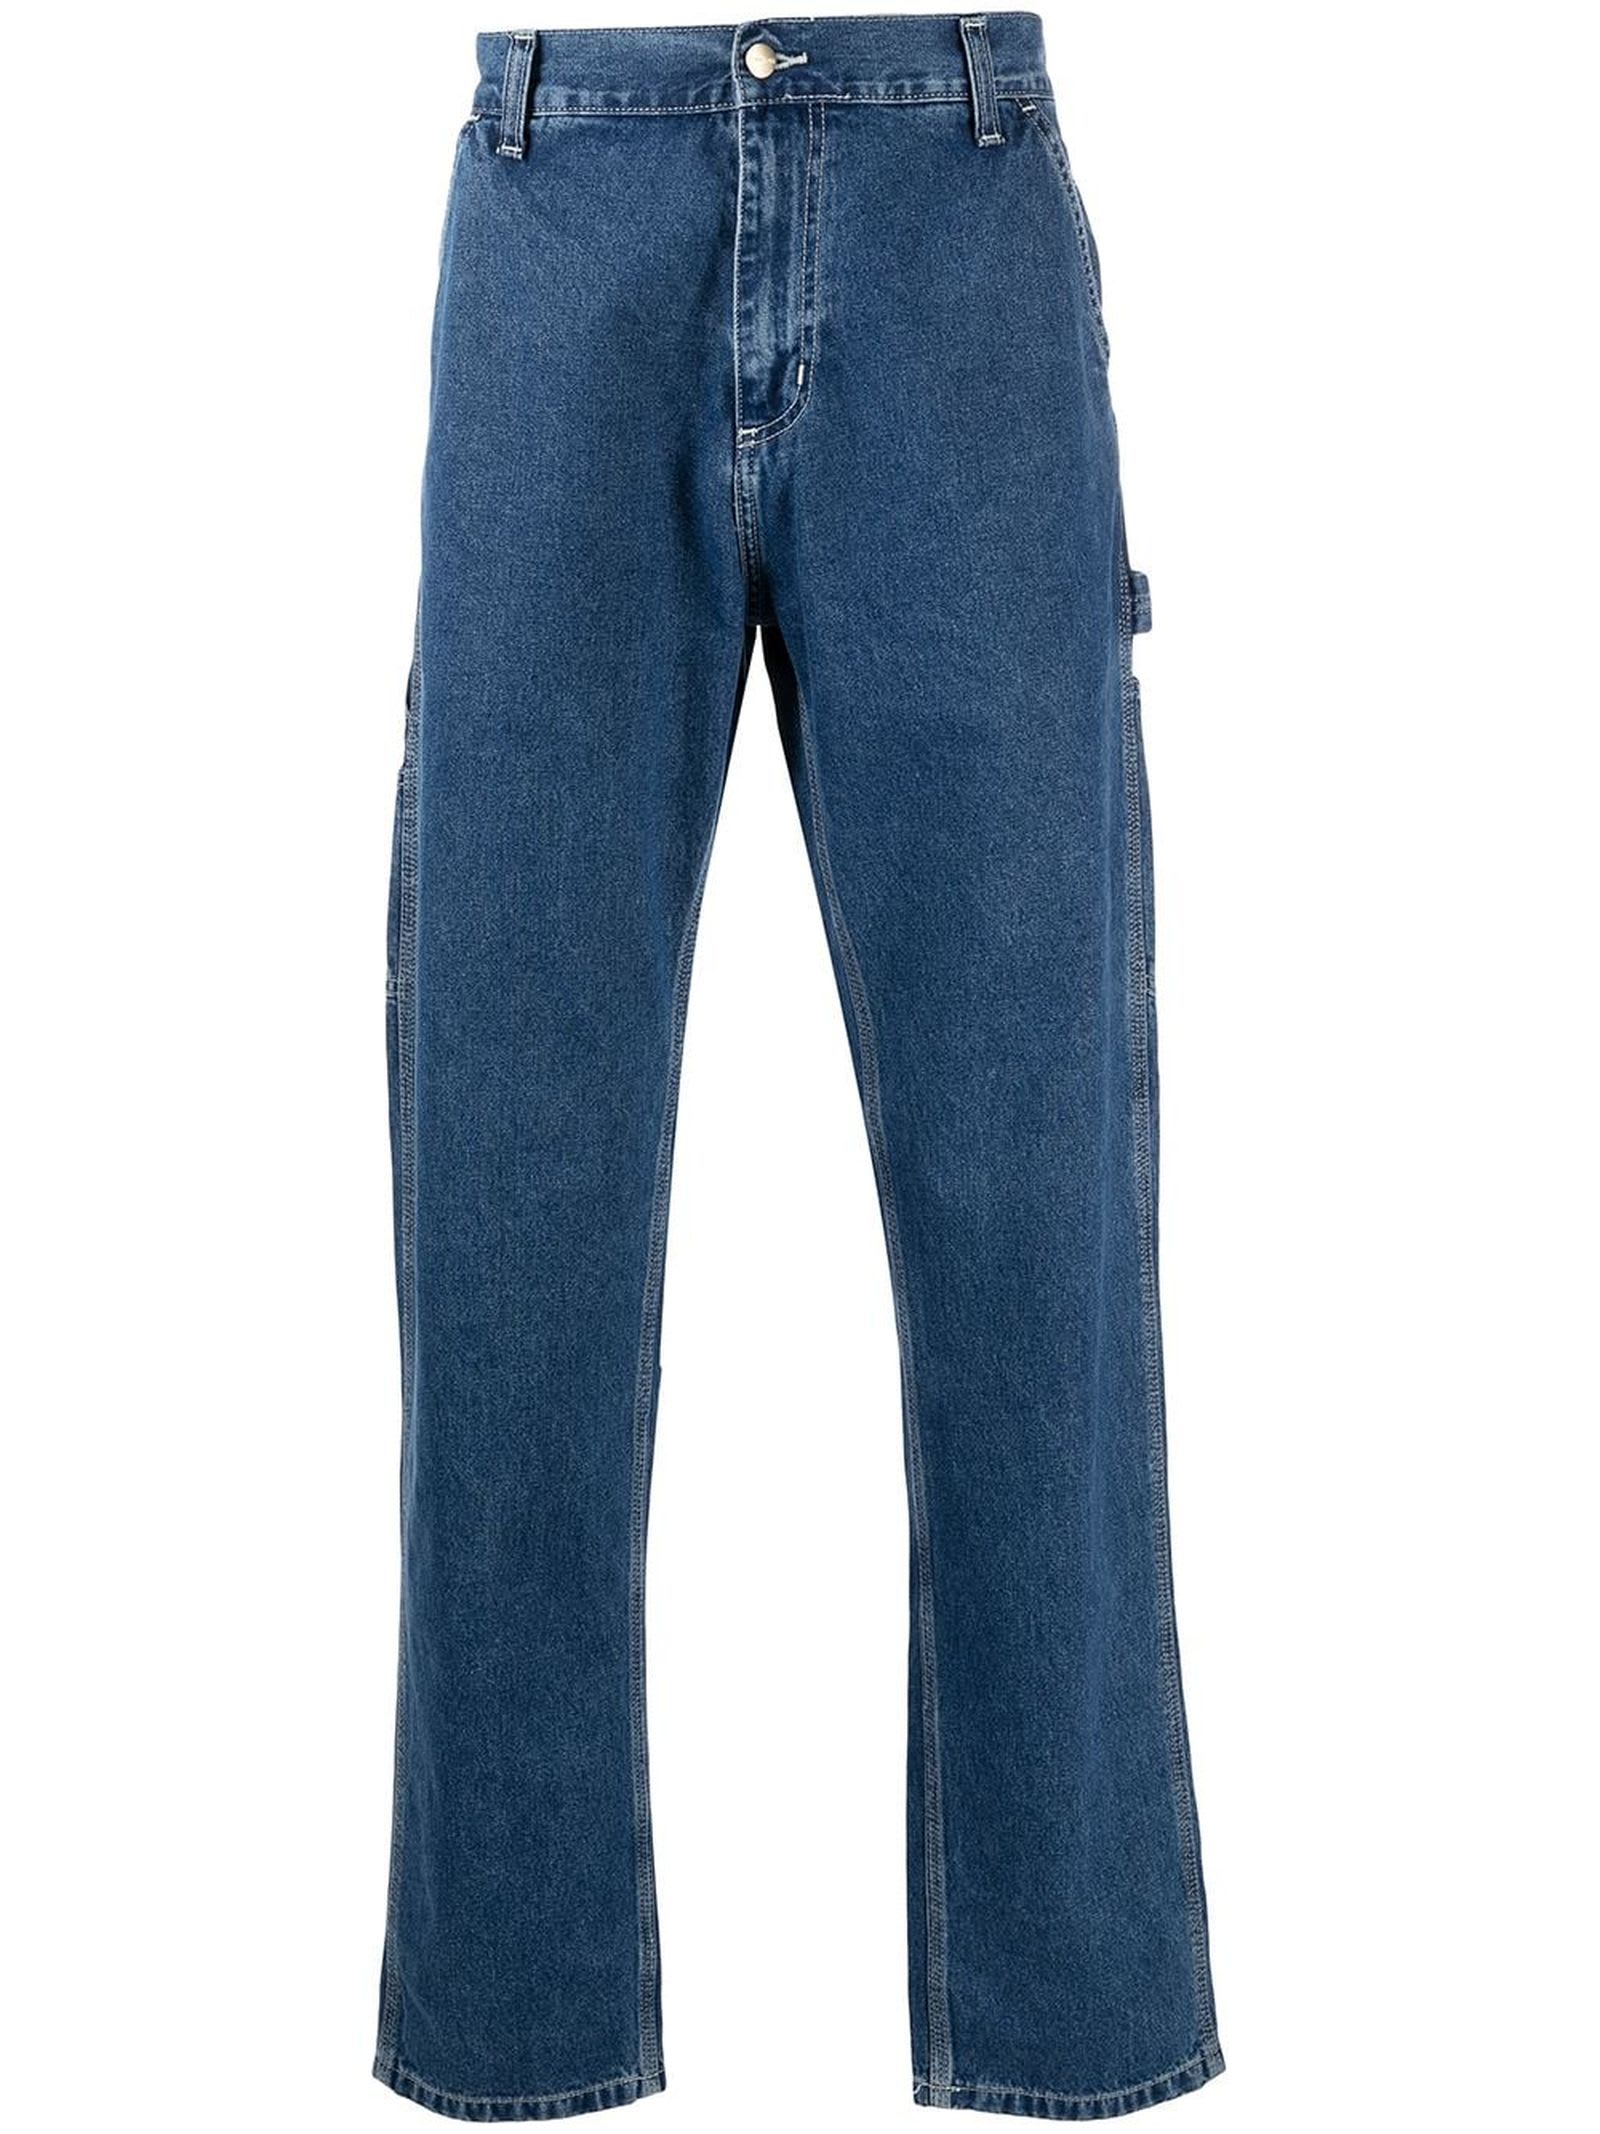 Carhartt Blue Cotton-denim Jeans